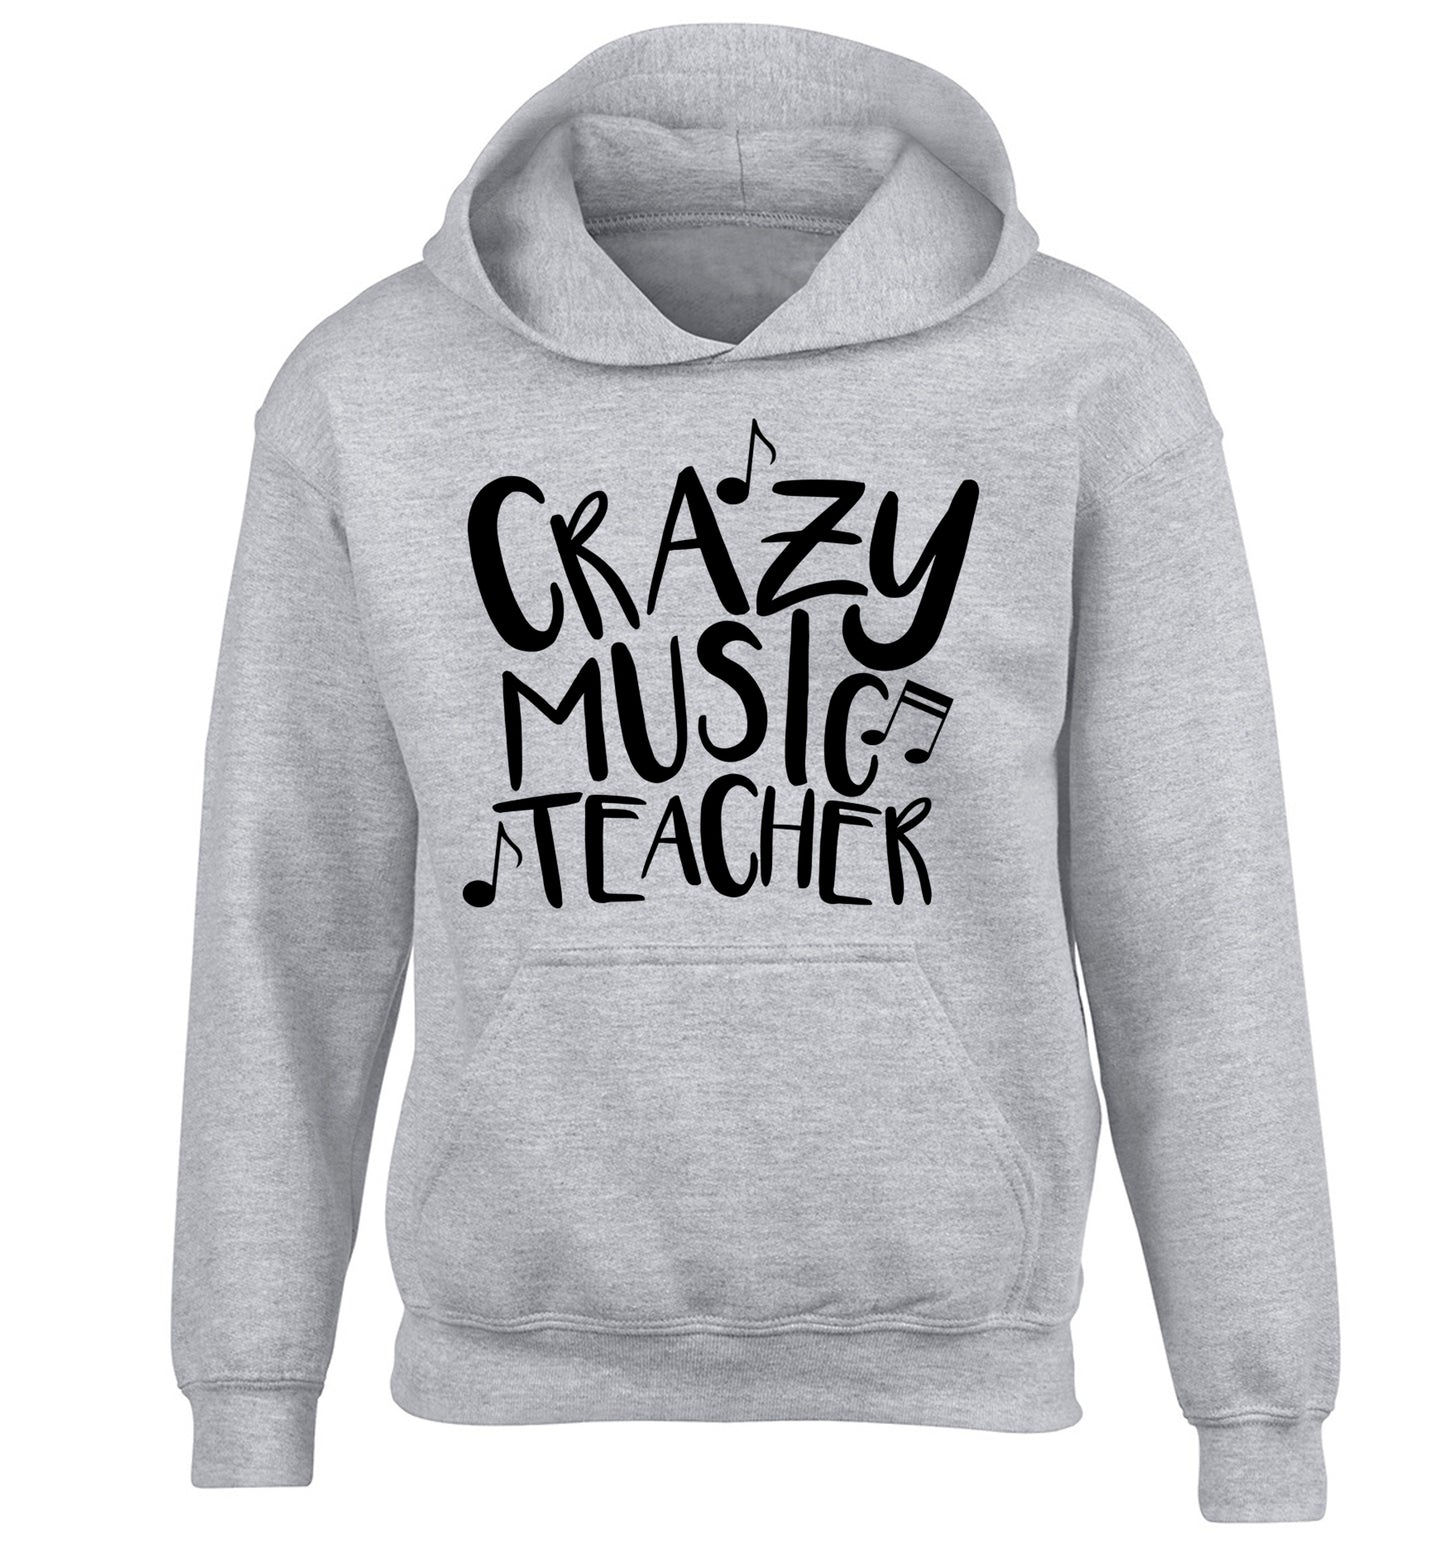 Crazy music teacher children's grey hoodie 12-13 Years